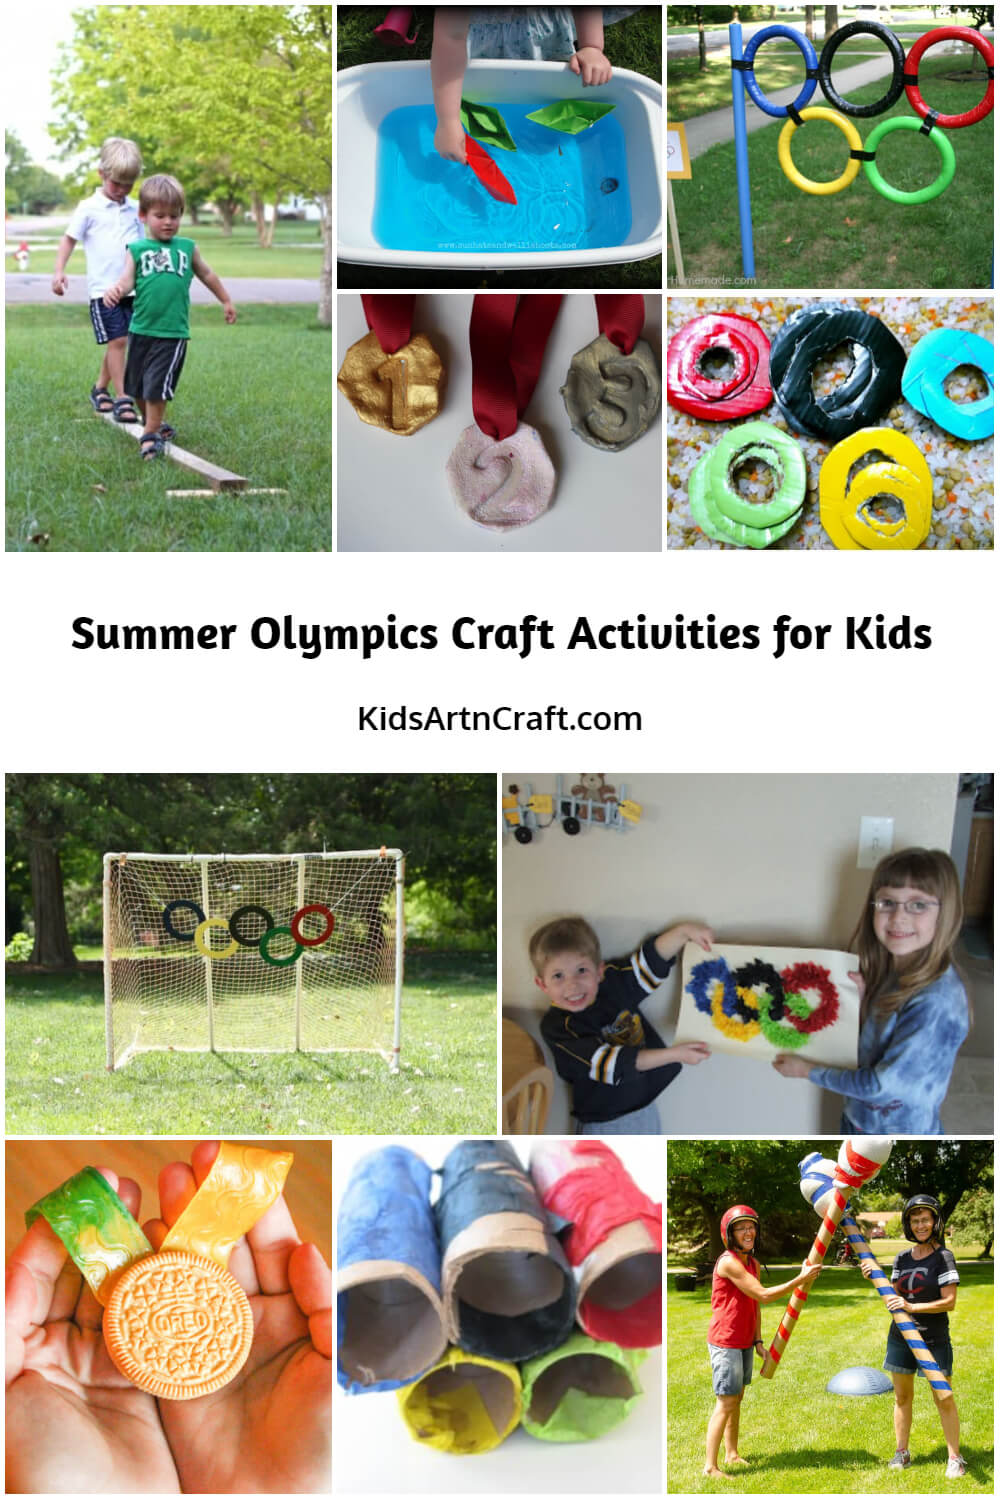 Summer Olympics Craft Activities for Kids